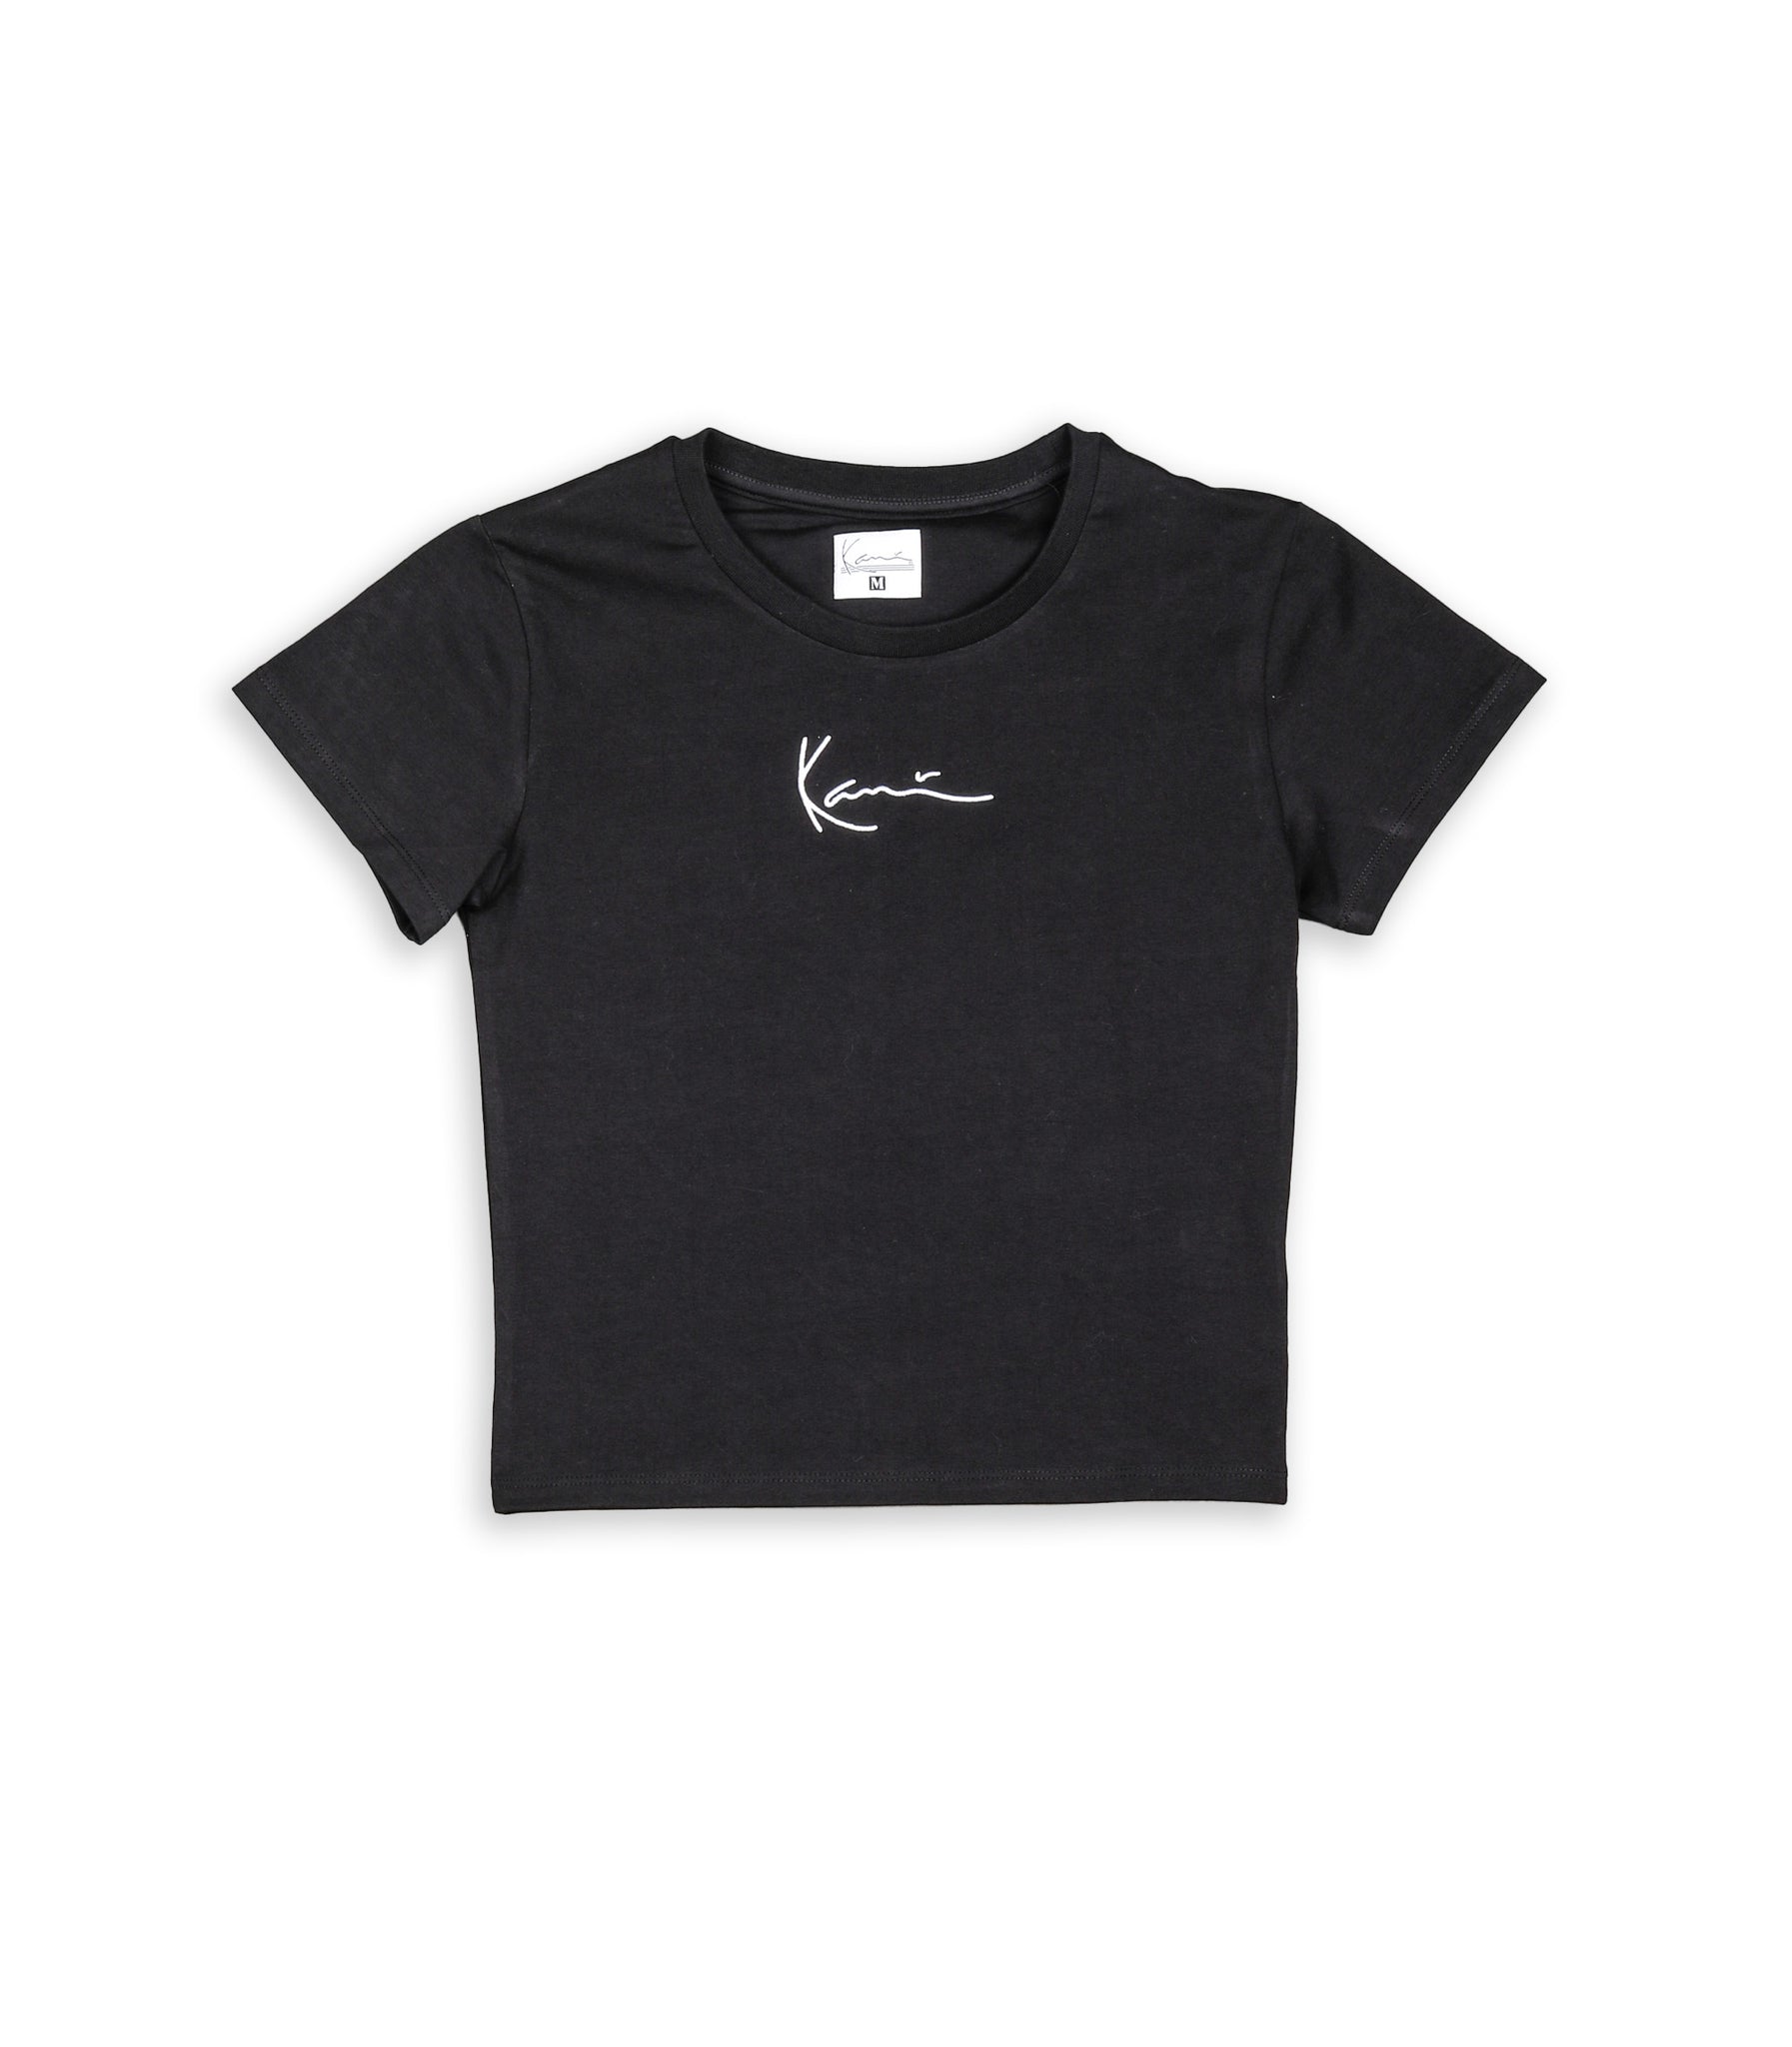 Karl Kani Small Signature Short Tee Black Women's T-Shirt